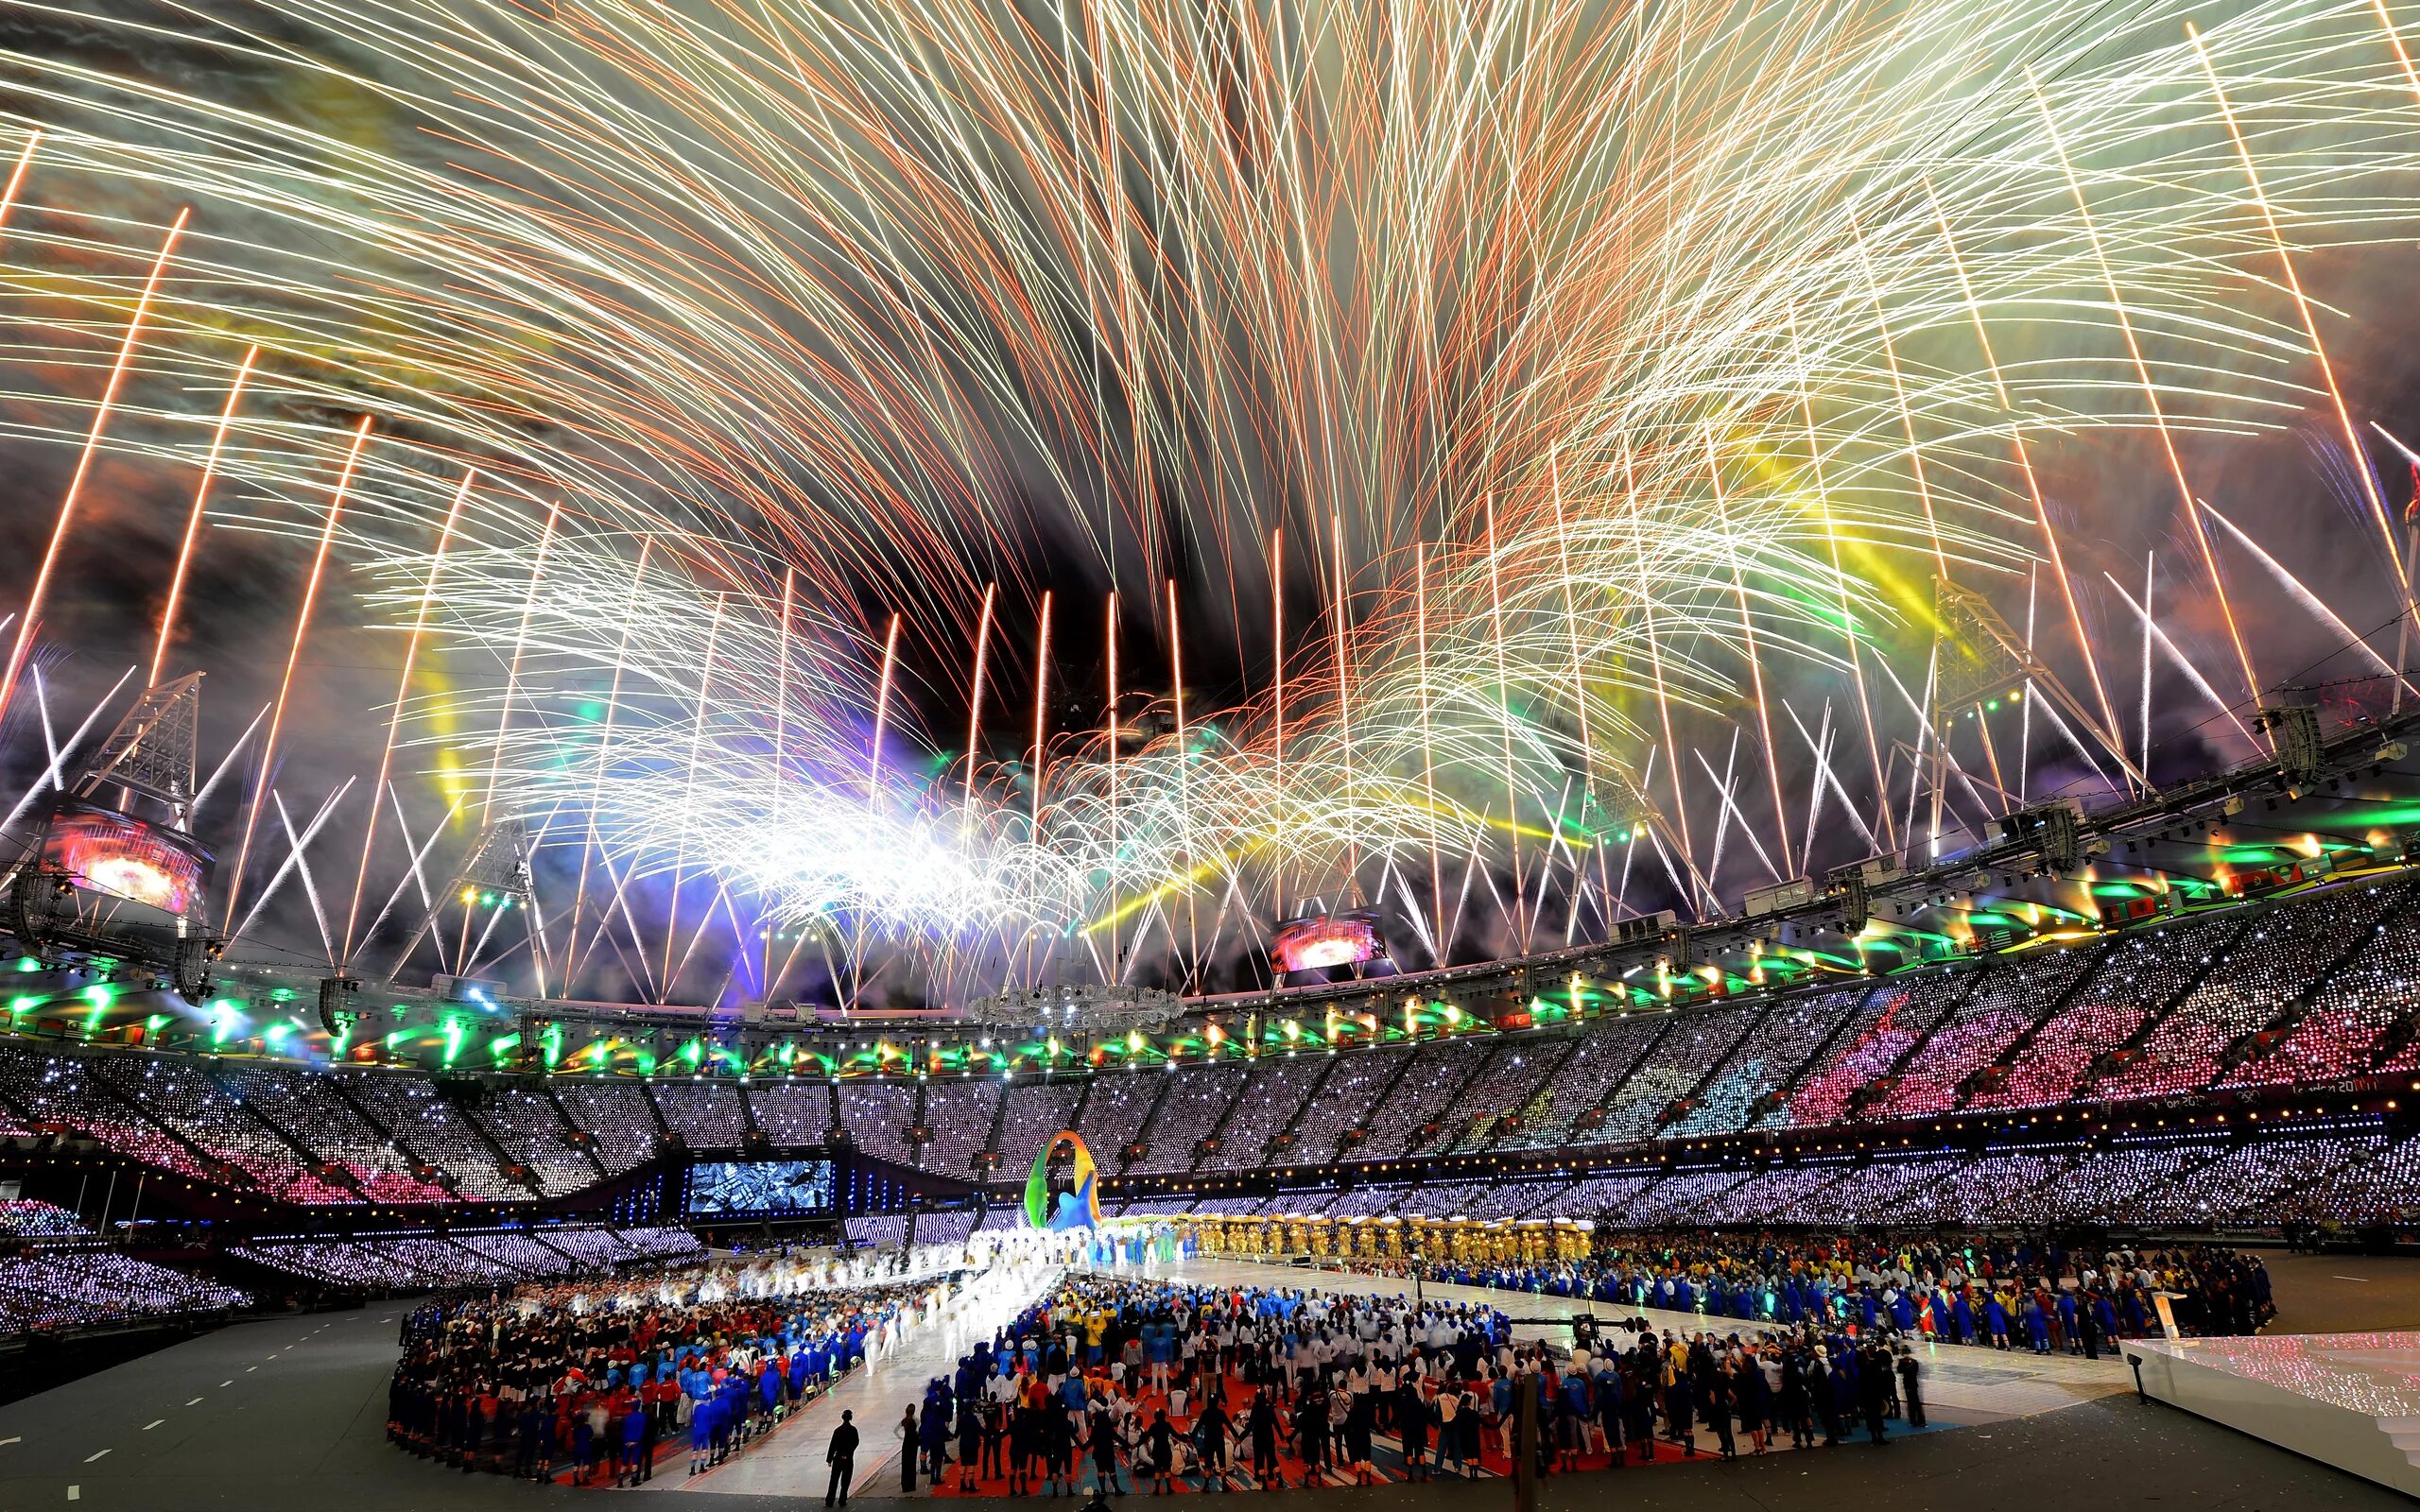 Олимпийский стадион Лондон 2012. Фишт стадион фейерверк. Сочи летние Олимпийские игры стадион. Олимпийский салют Олимпийских игр.